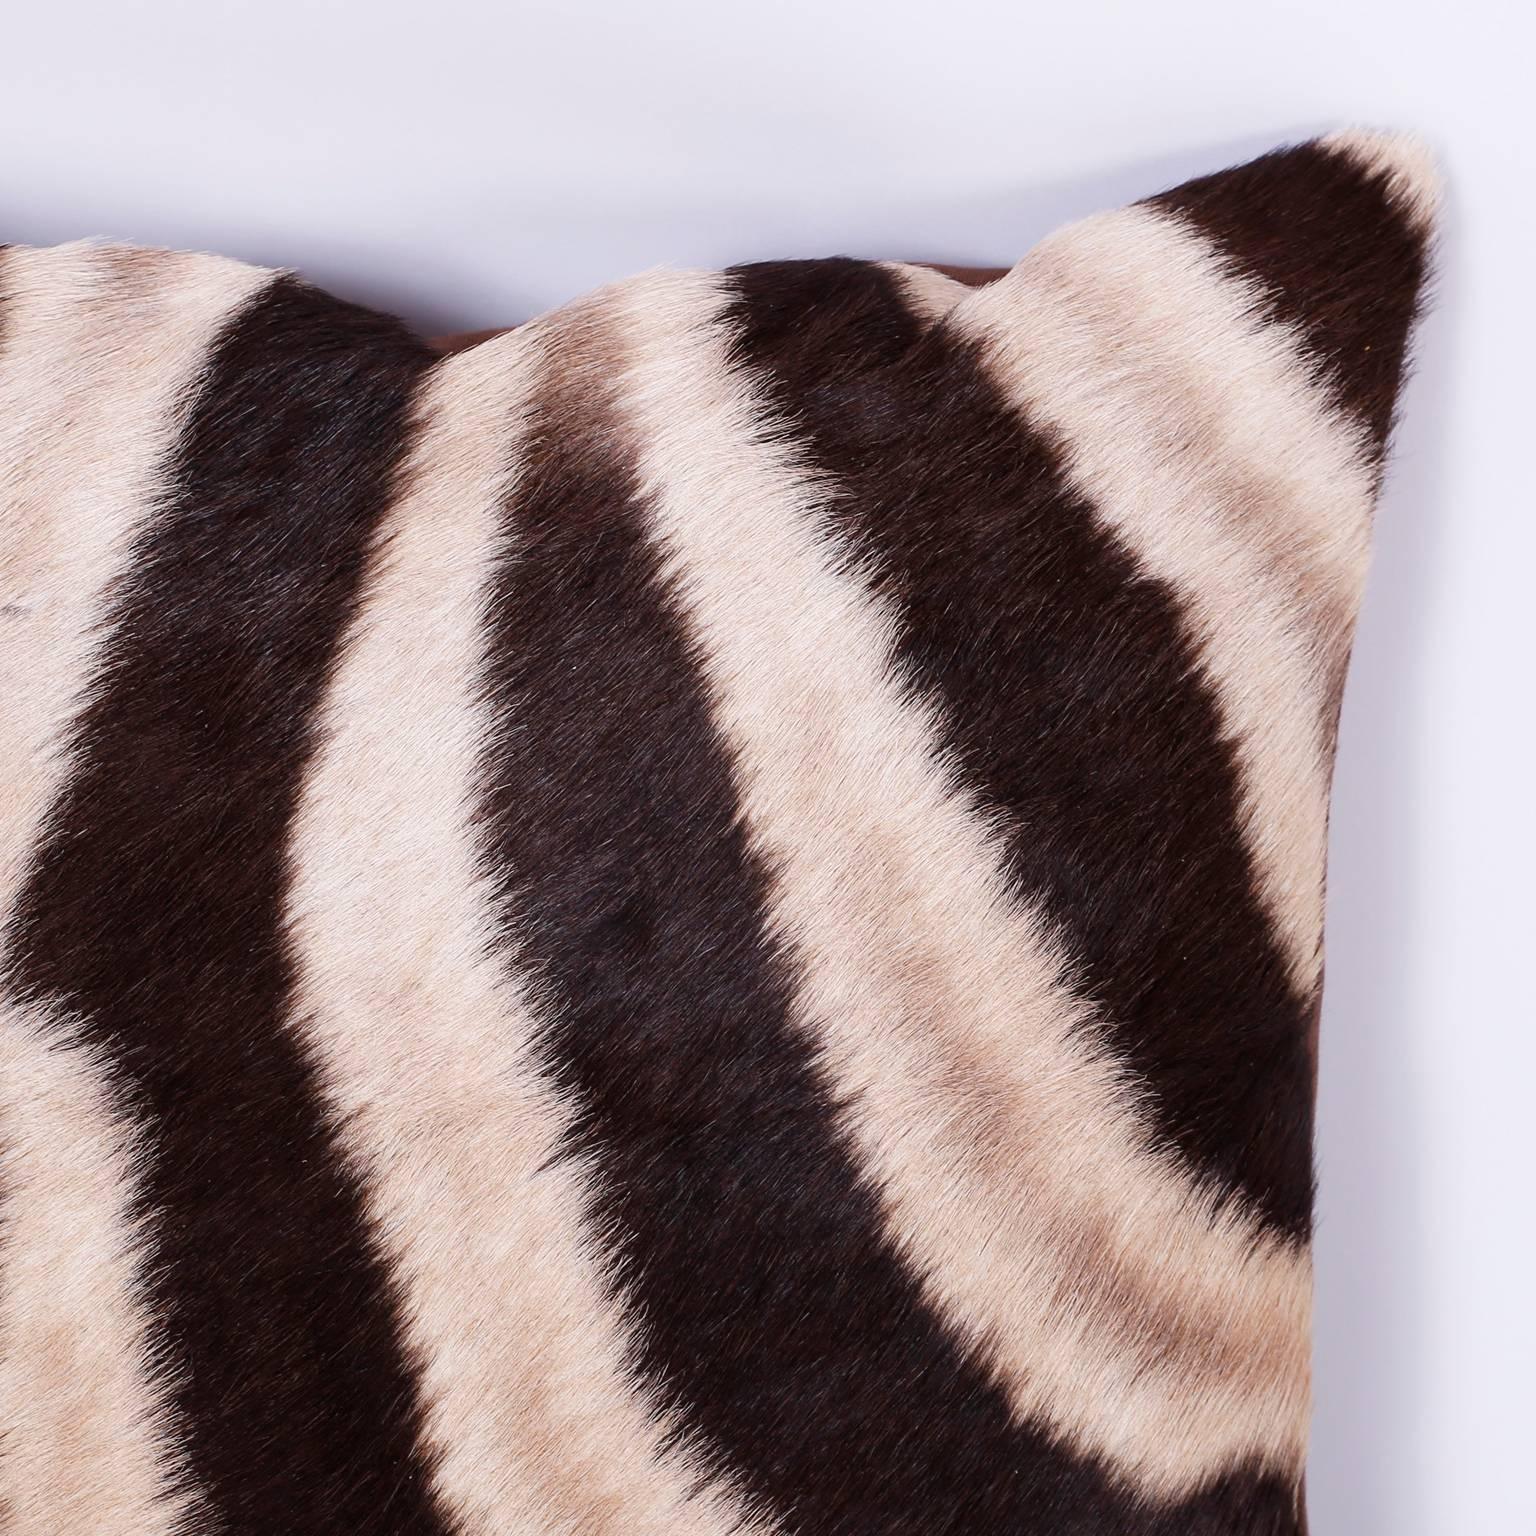 British Colonial Pair of Zebra Hide Pillows